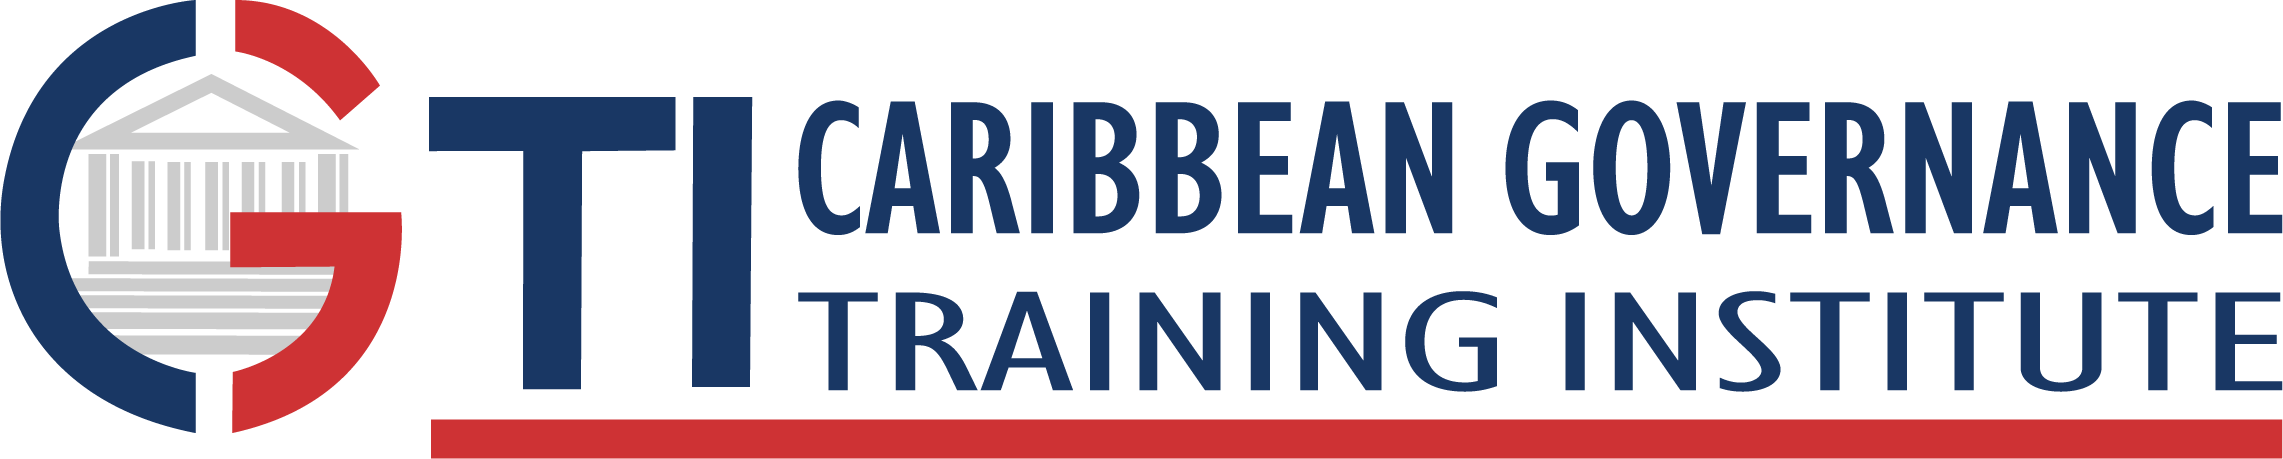 Caribbean Governance Training Institute